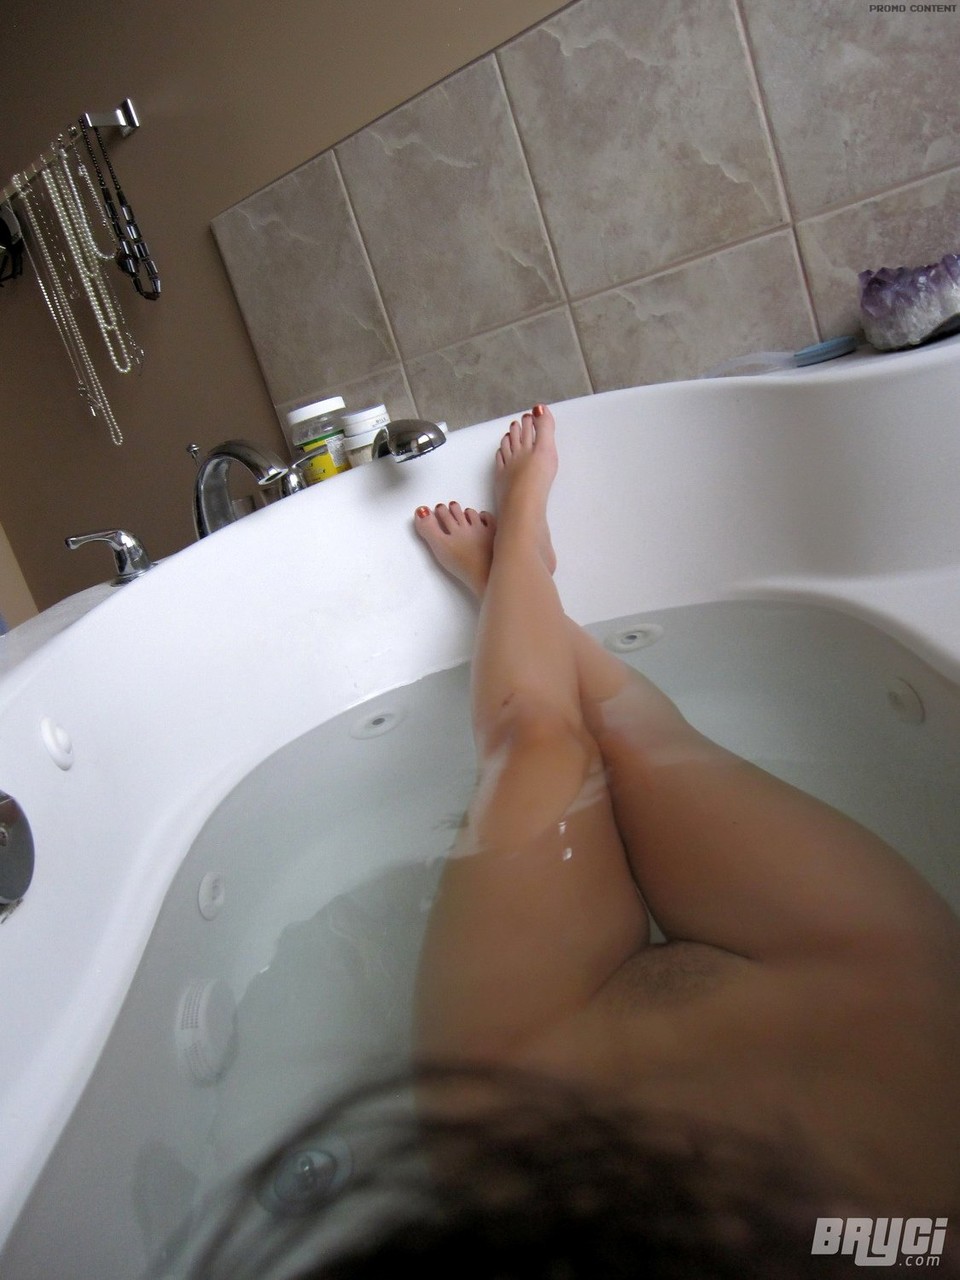 Stunning model Bryci in the tub showing off her big tits and perfect nipples ポルノ写真 #422527703 | Bryci Pics, Bryci, Selfie, モバイルポルノ